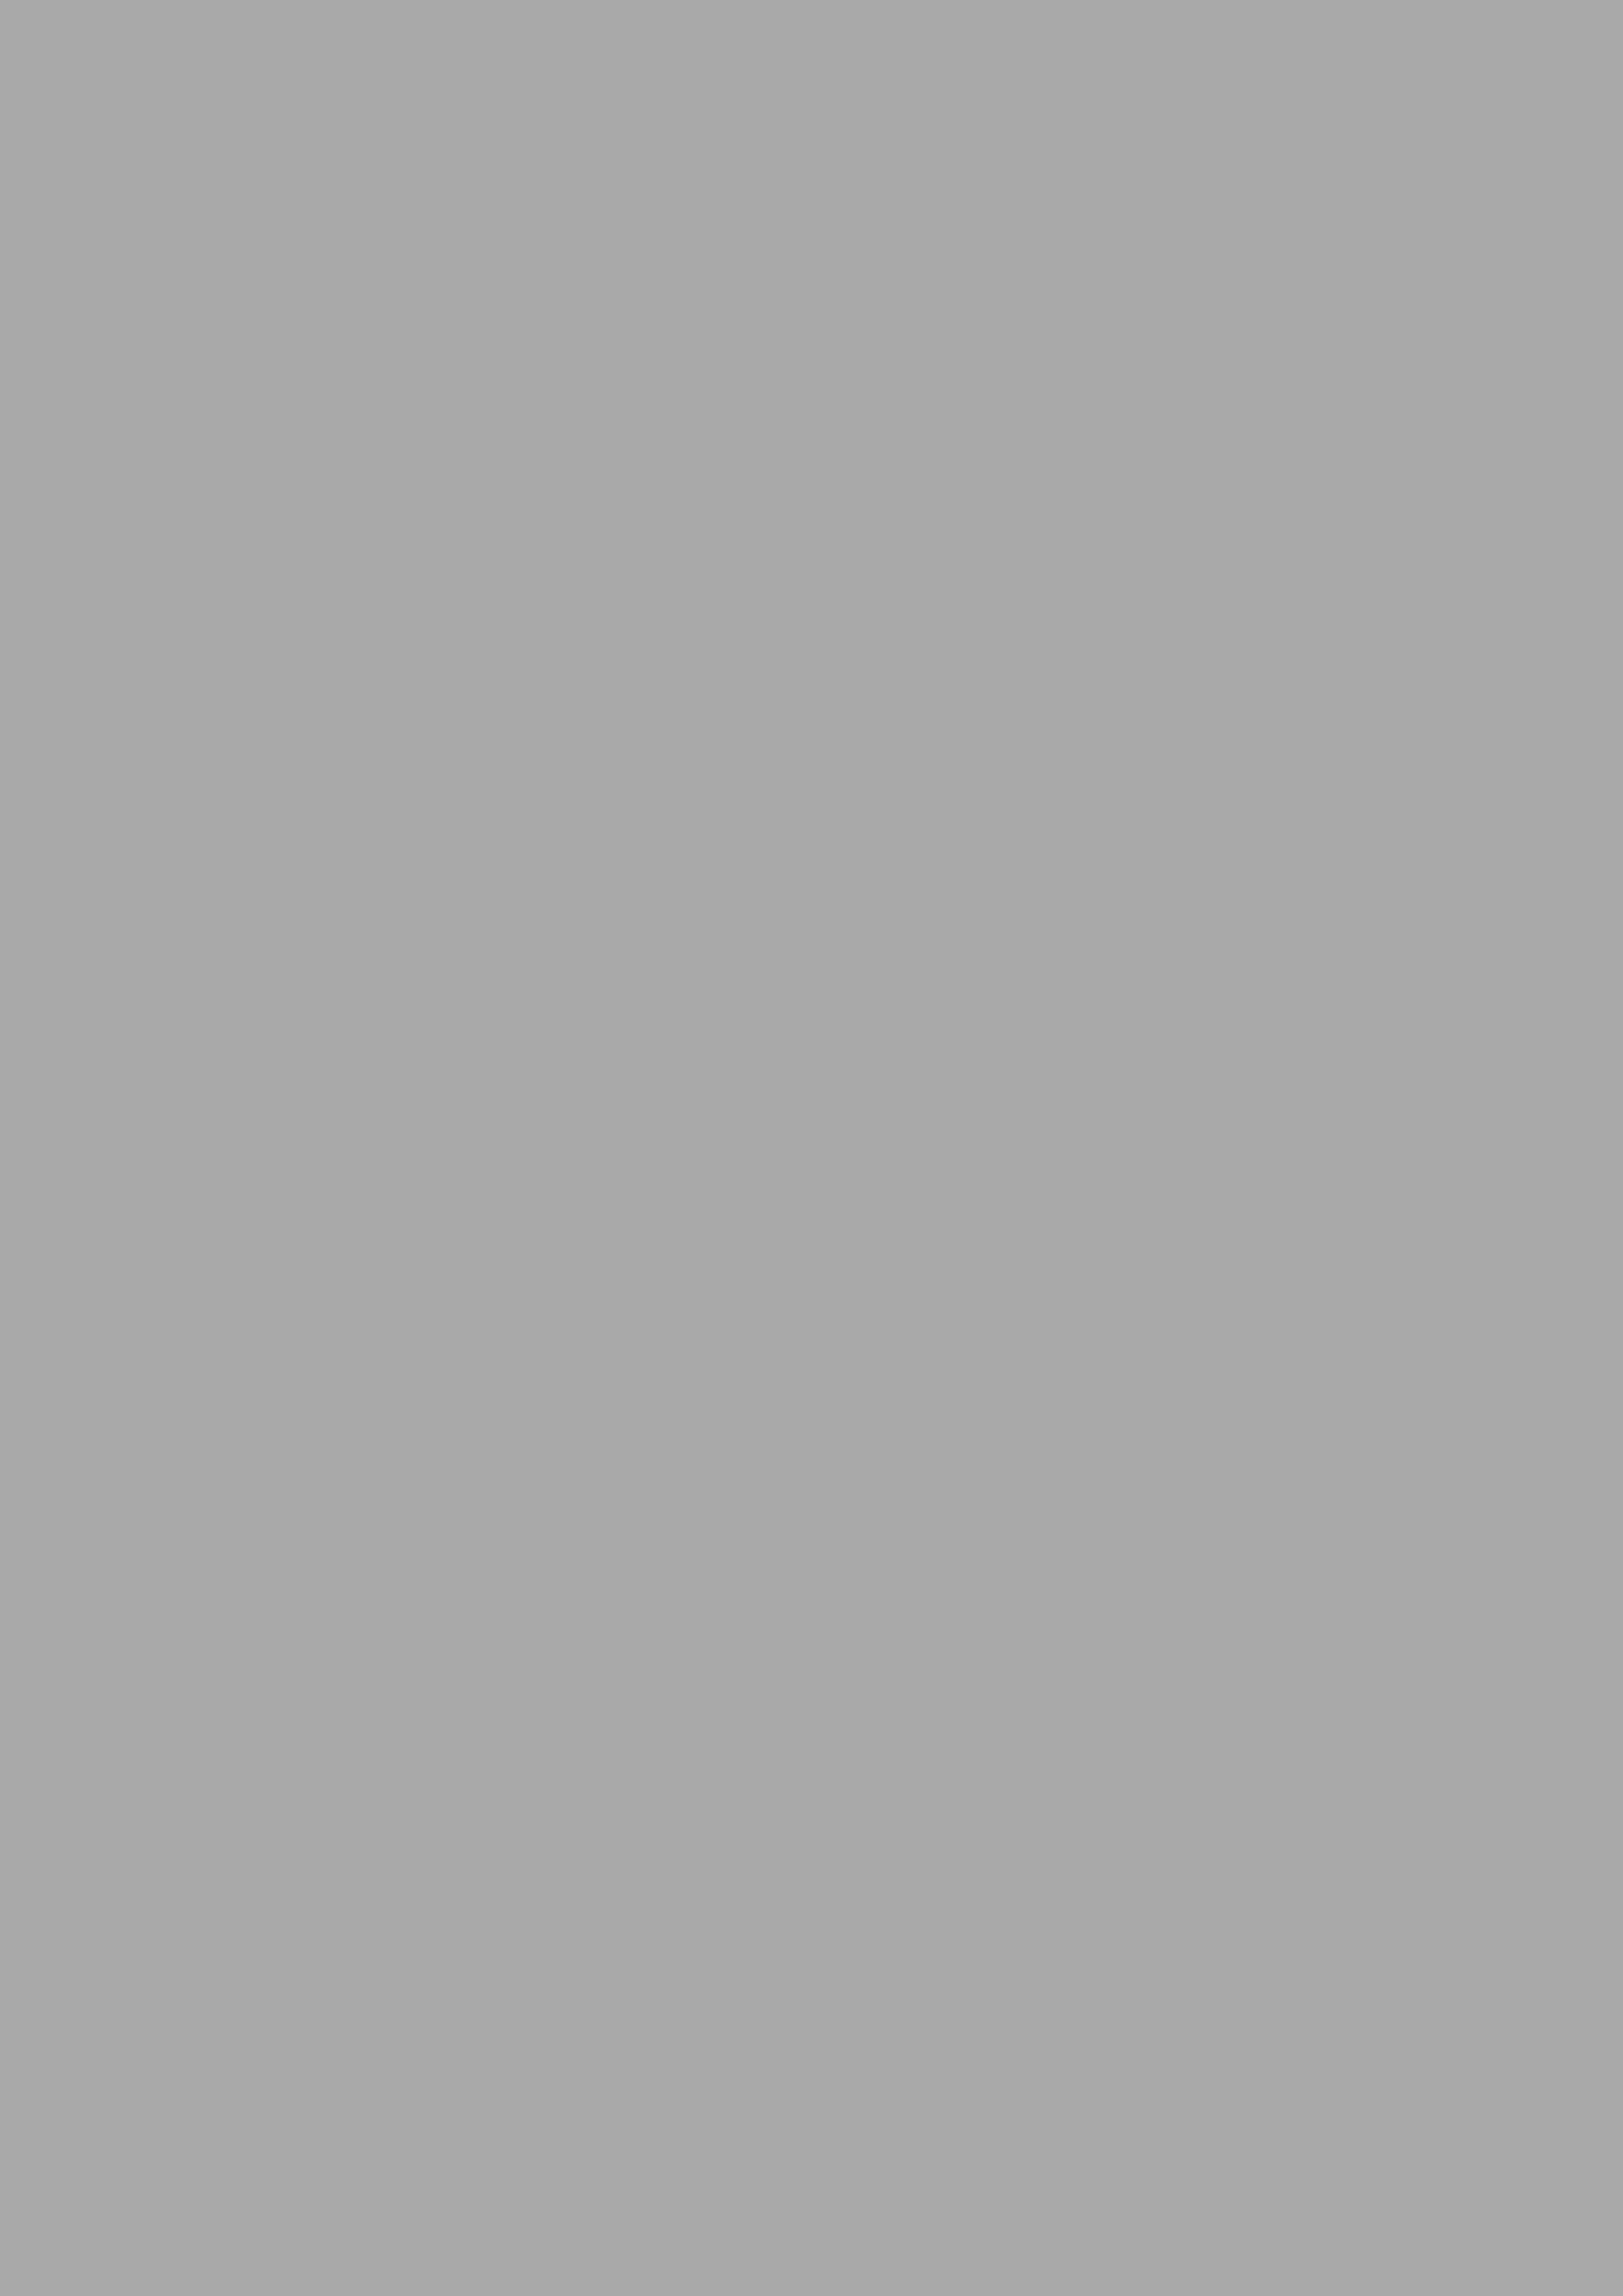 2480x3508 Dark Gray Solid Color Background